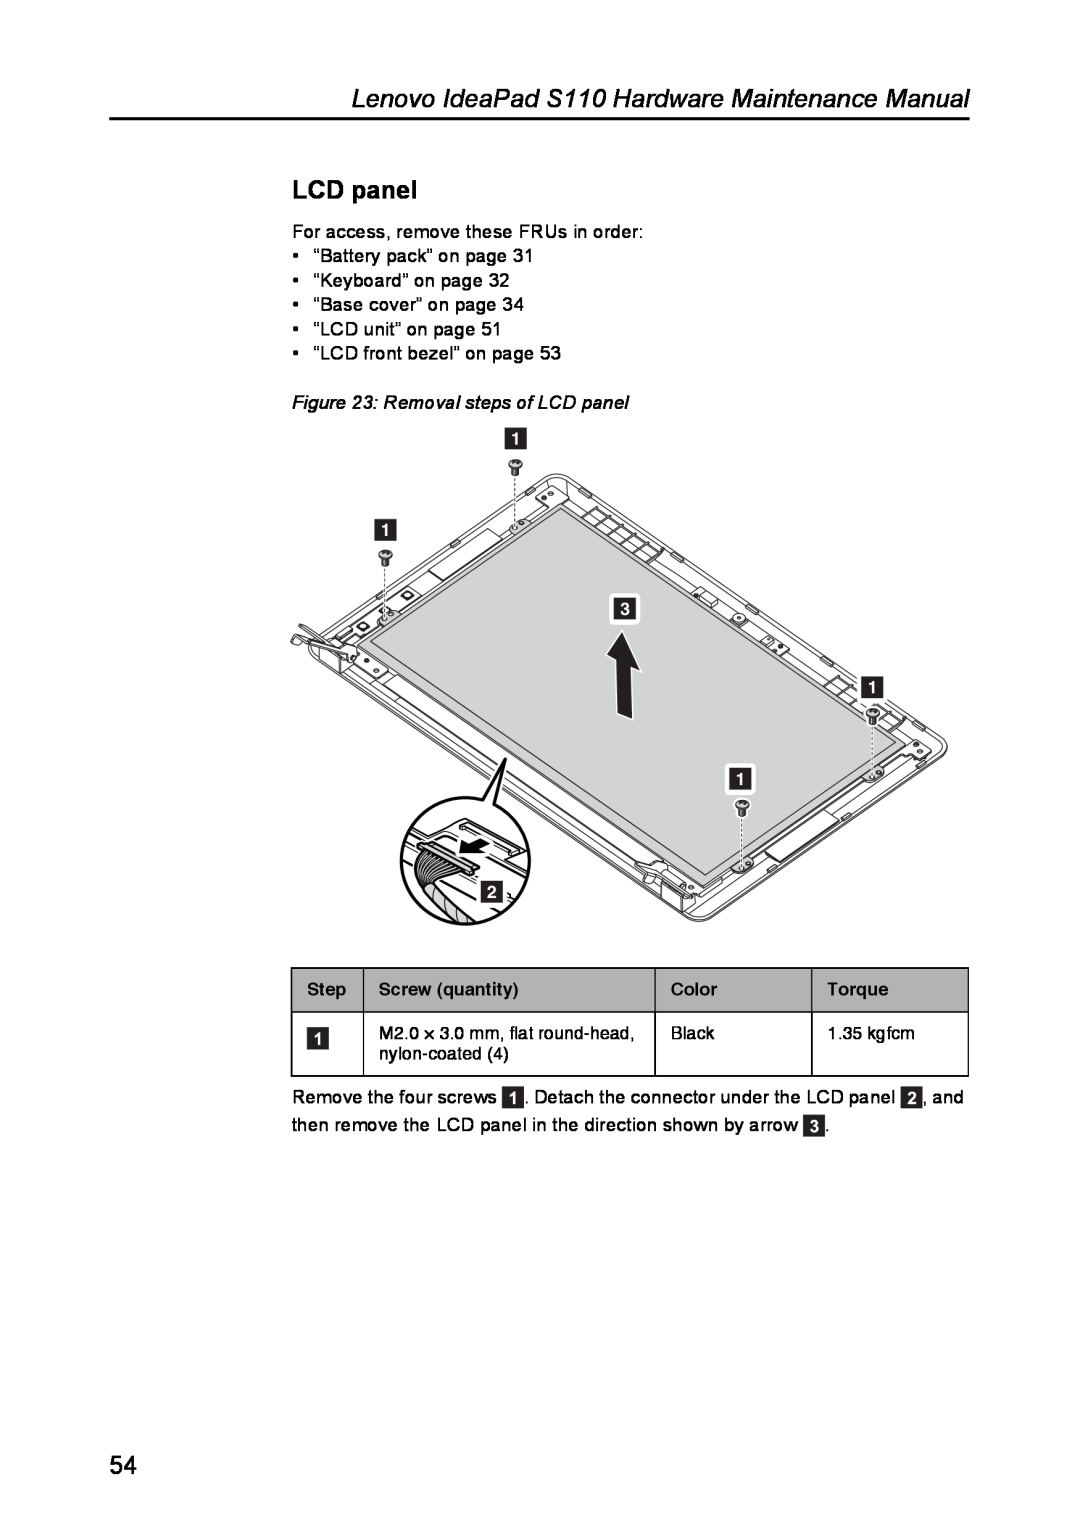 Lenovo manual Removal steps of LCD panel, Lenovo IdeaPad S110 Hardware Maintenance Manual 